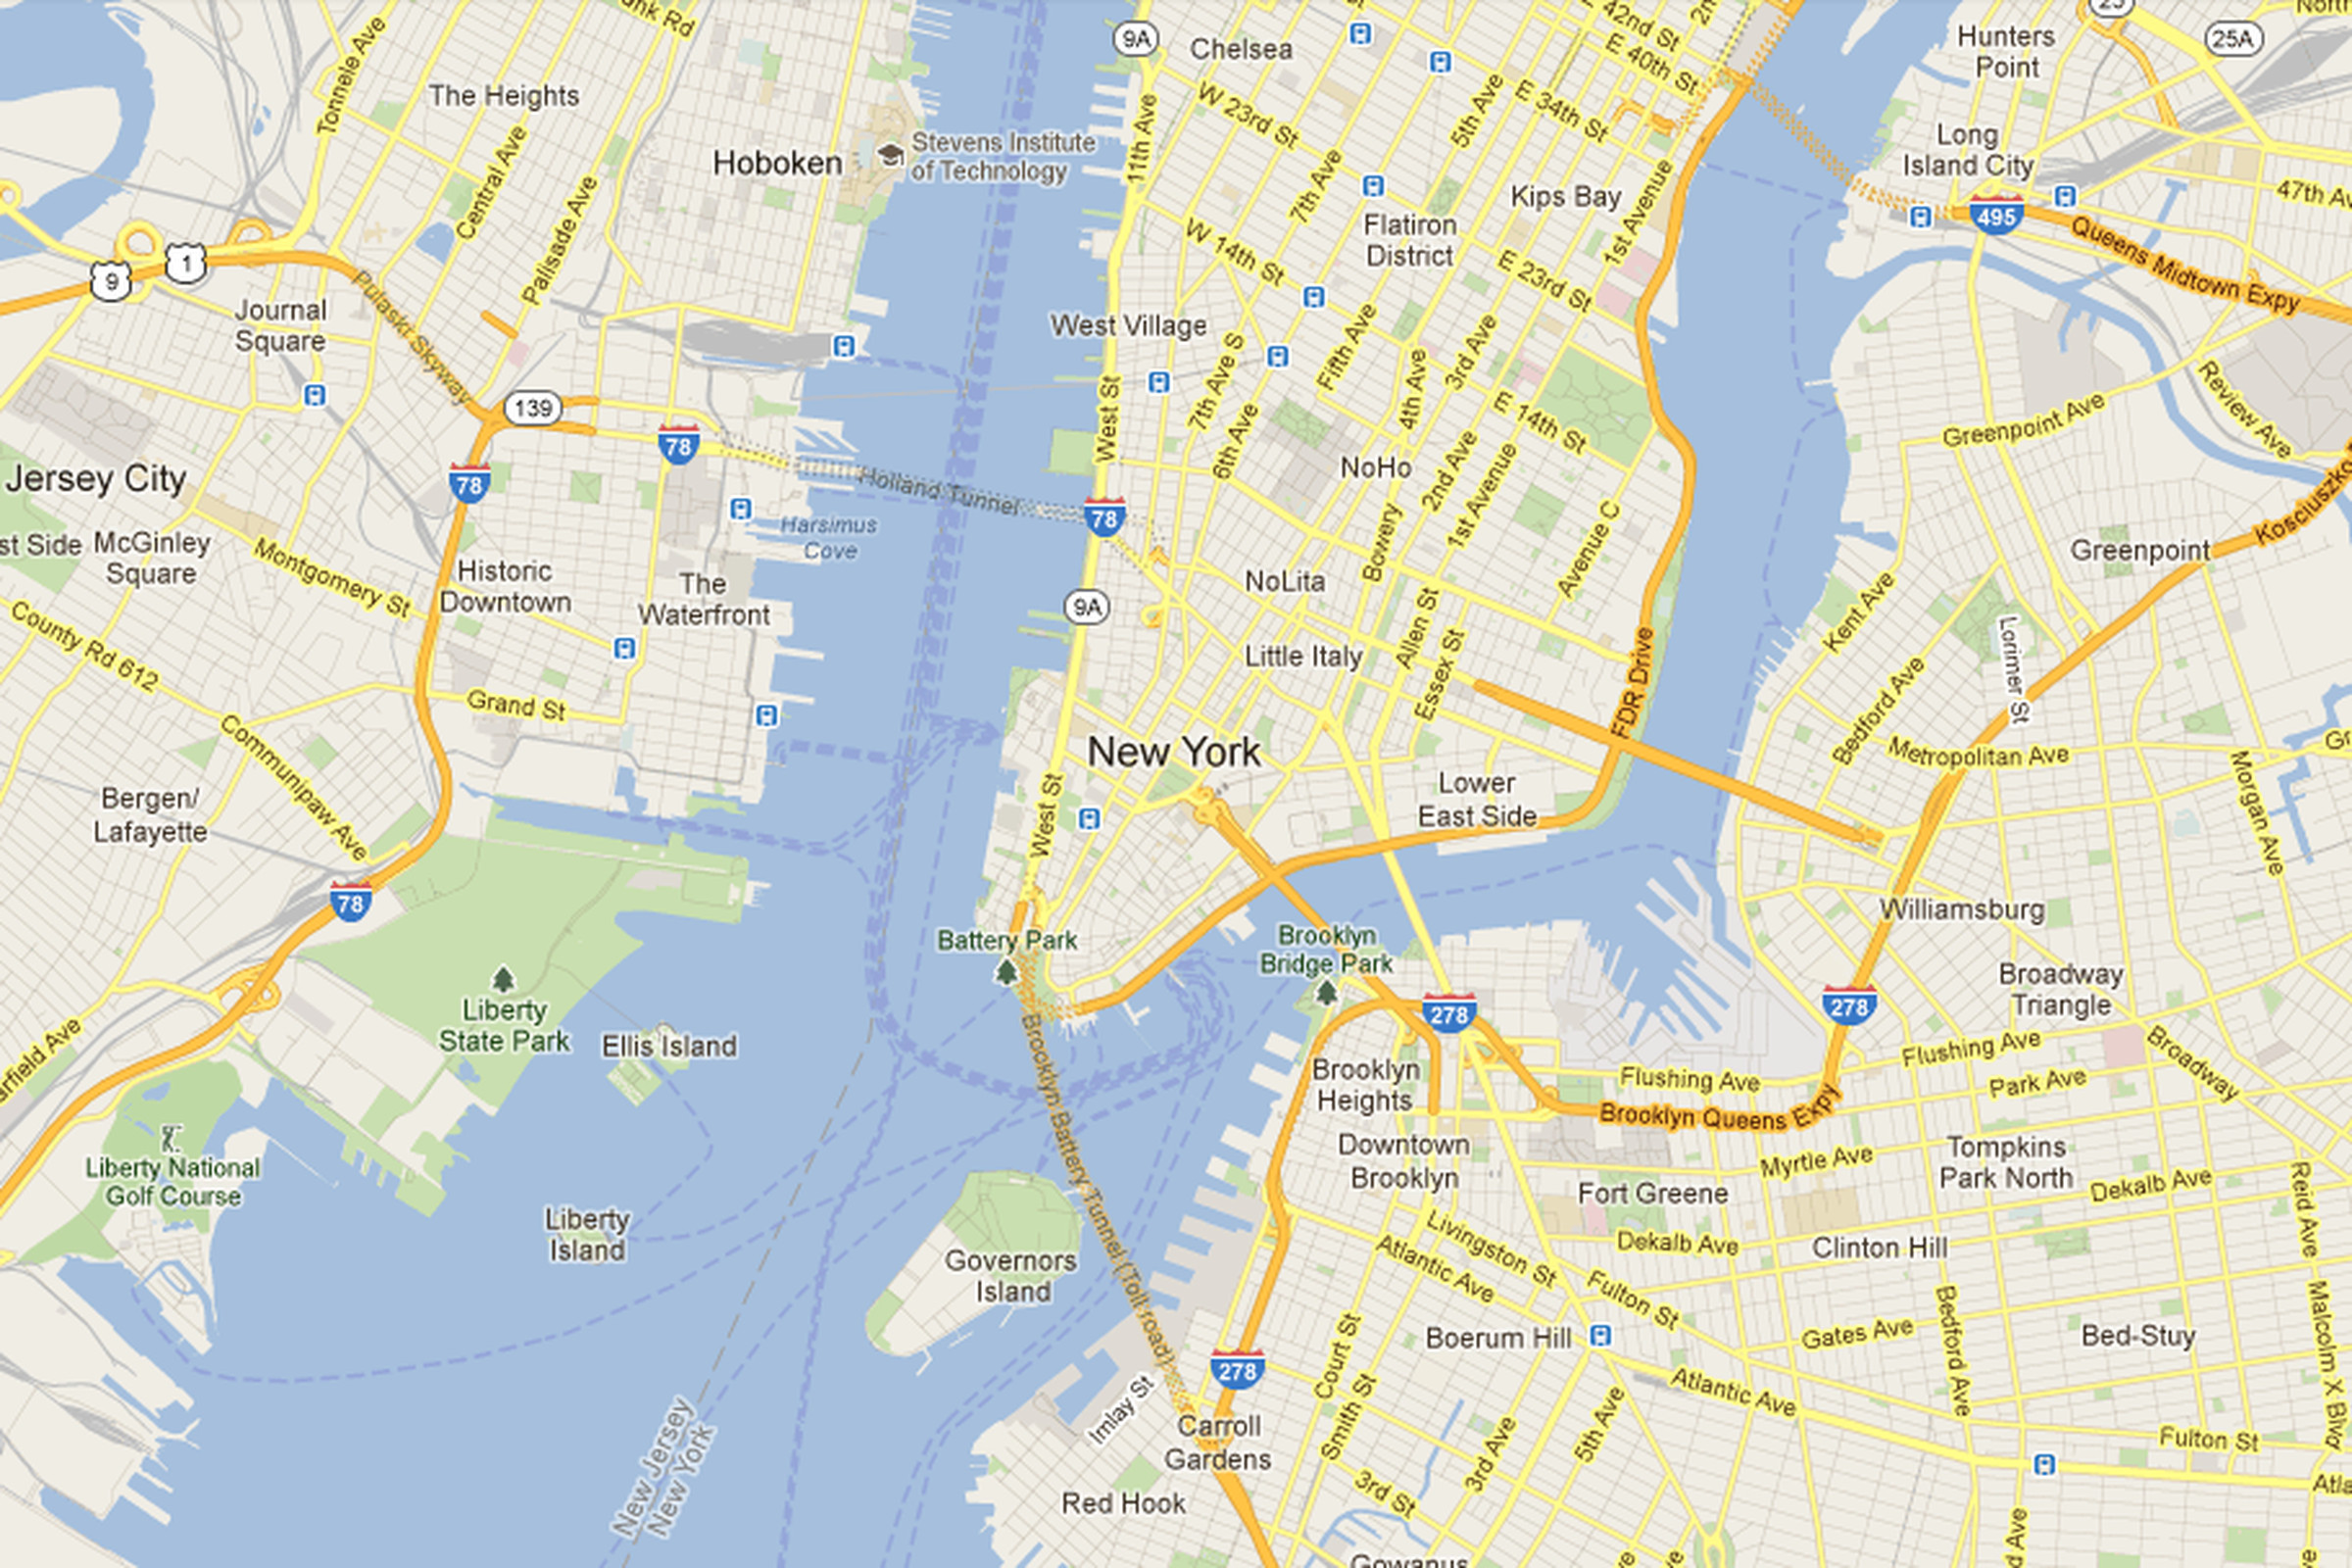 Google Map of New York City